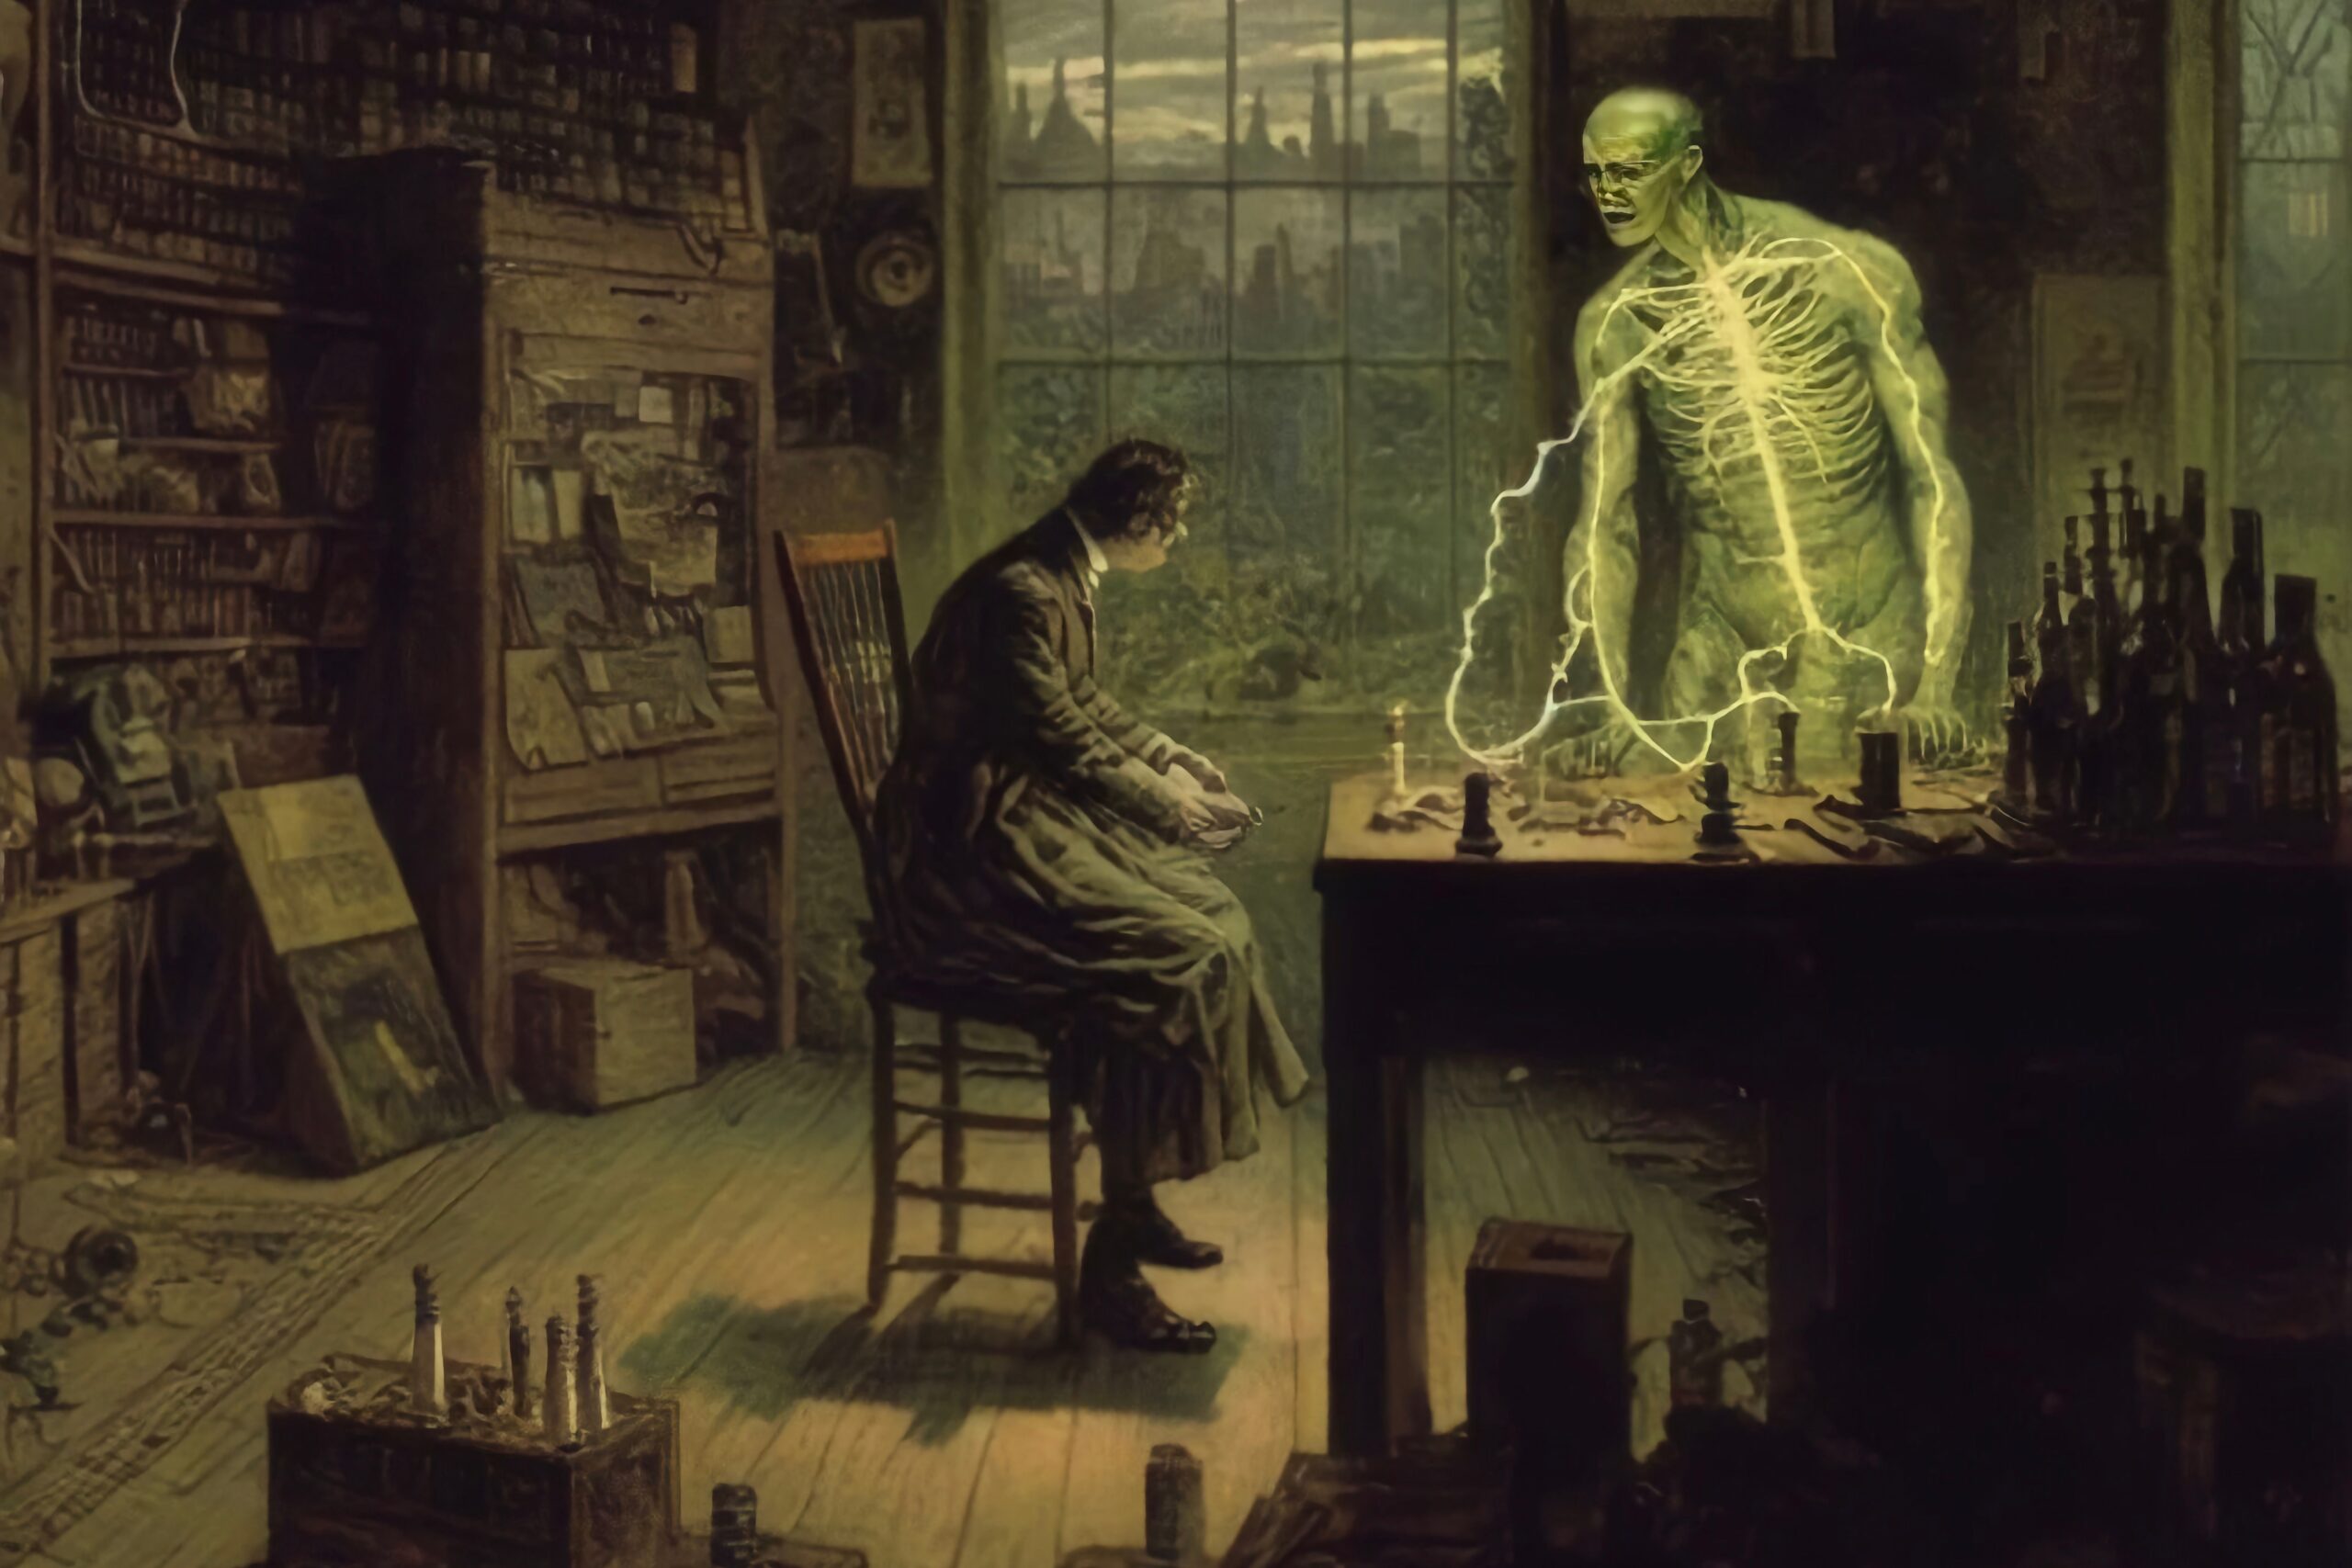 Inspiring Innovations Spotlight: Mary Shelley, The Mother of Science Fiction